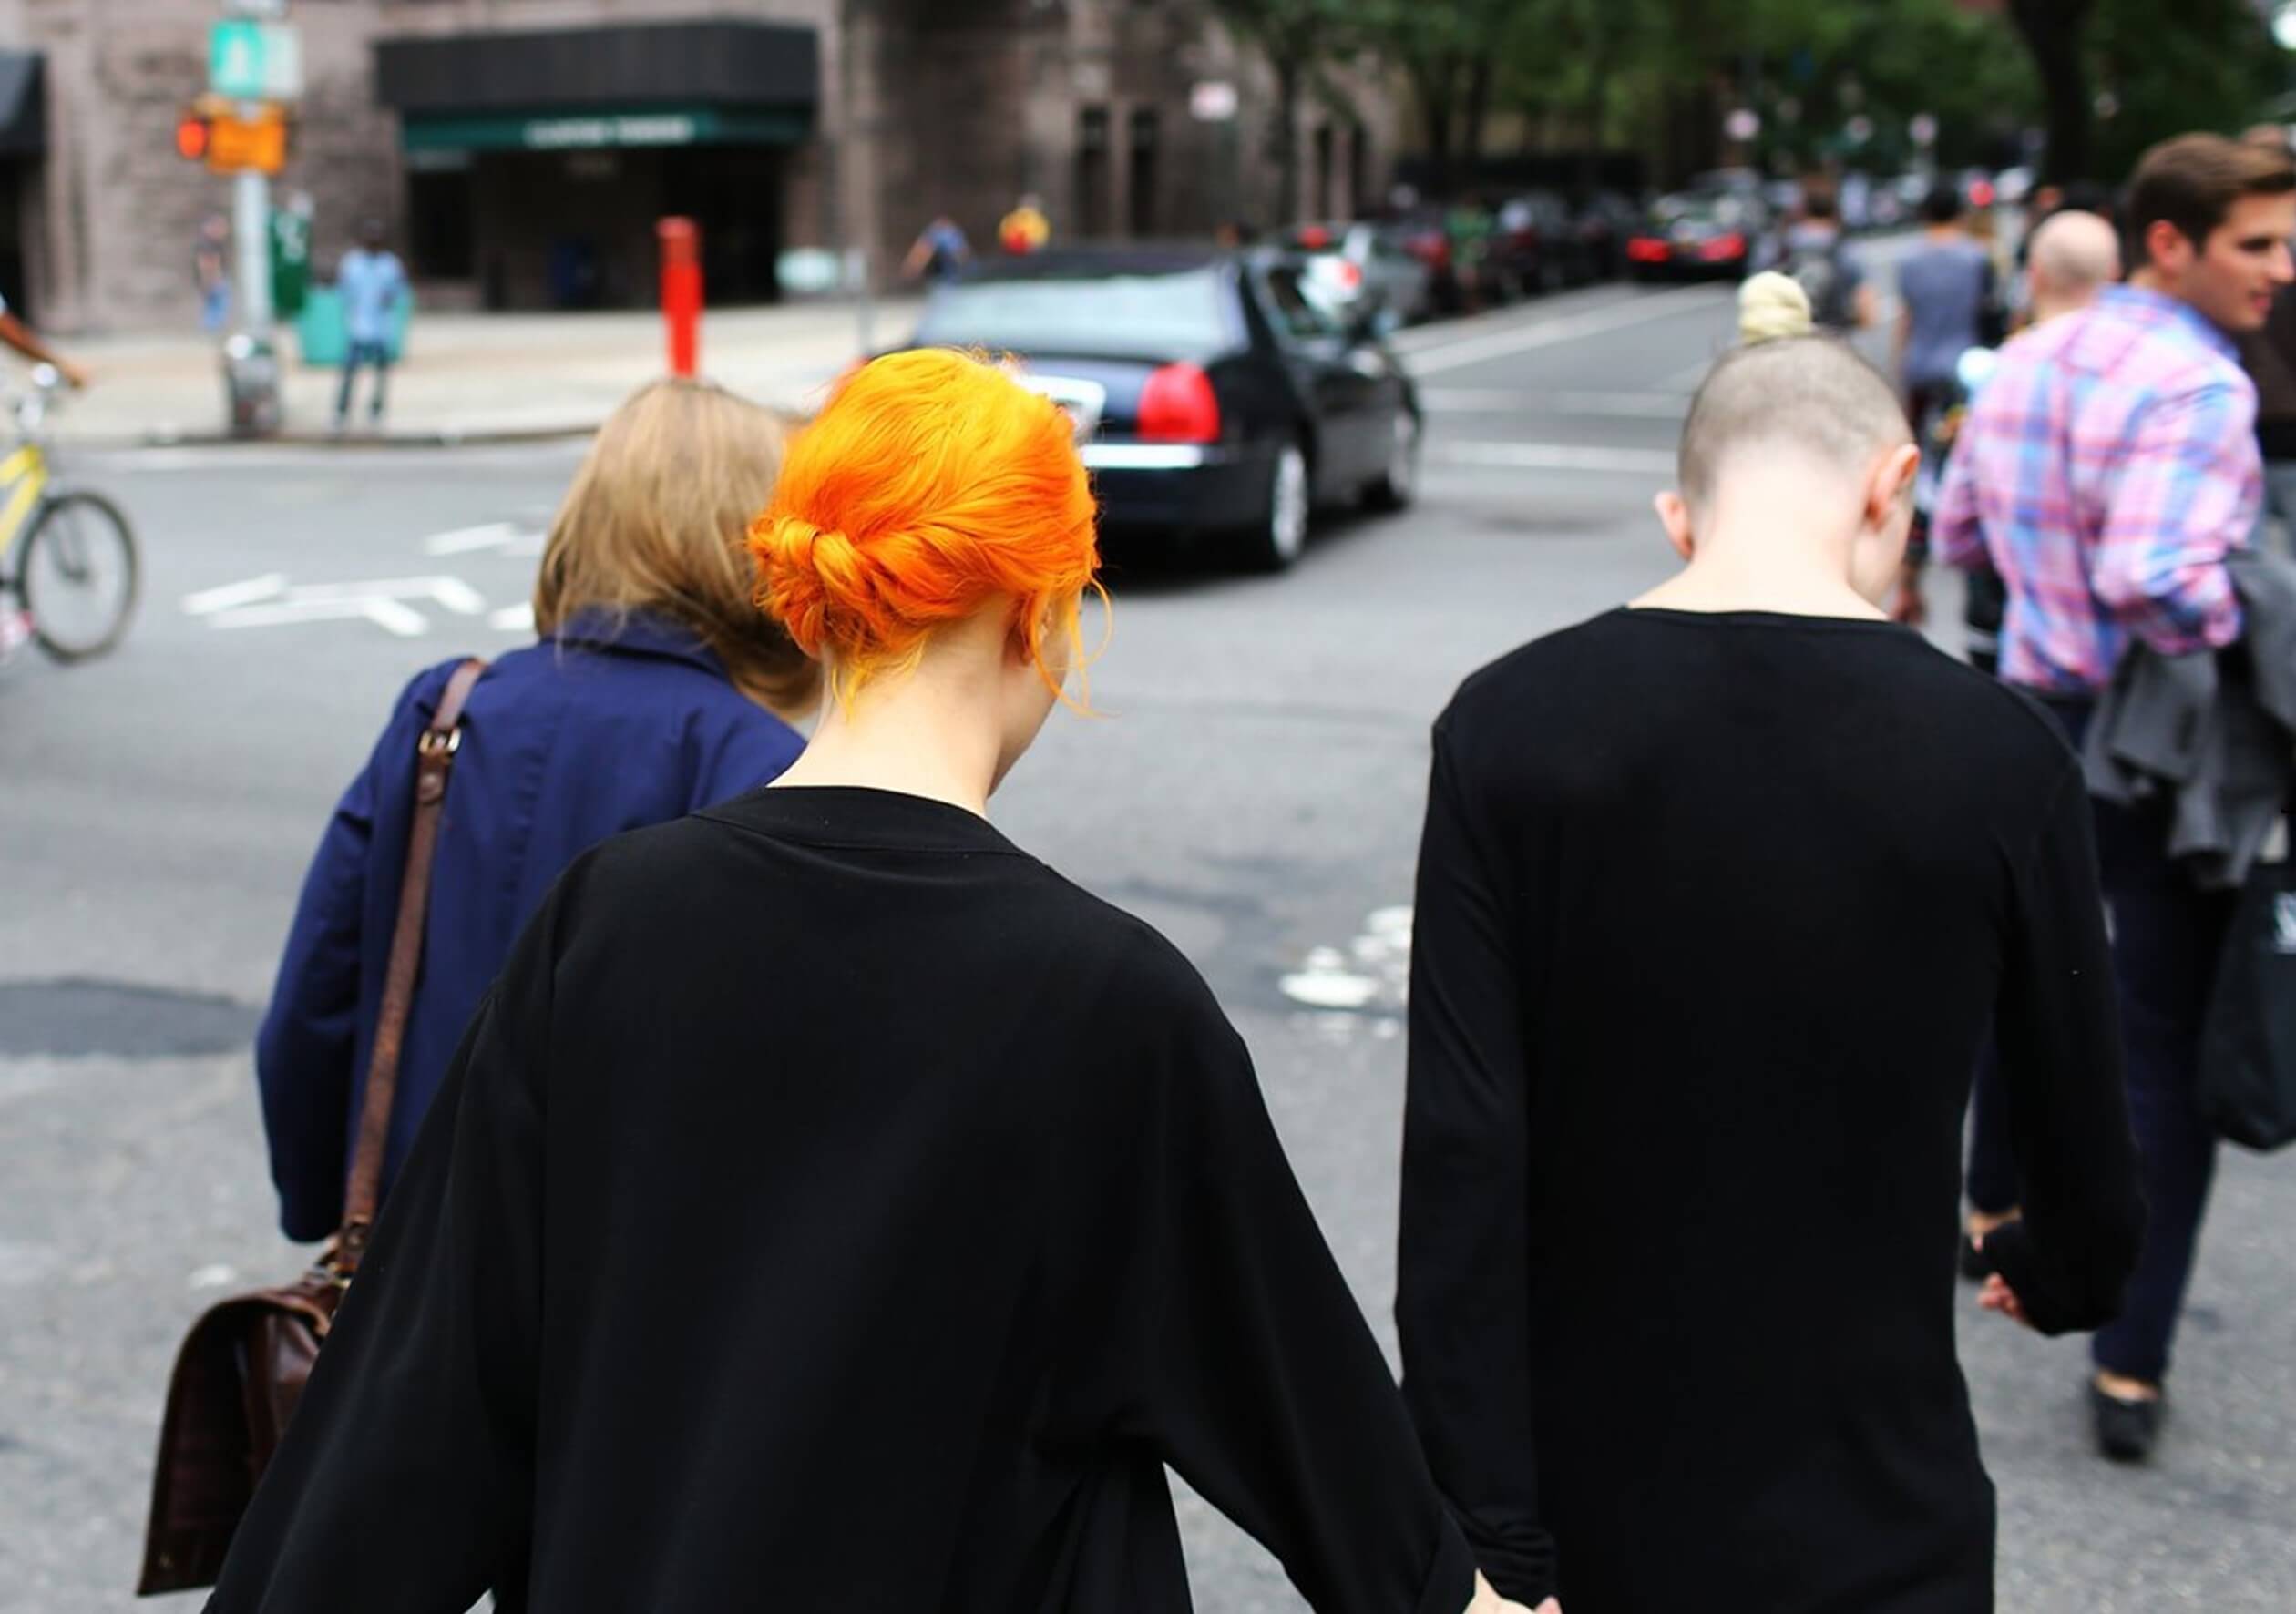 http://www.vogue.com/1144369/rainbow-hair-new-york-fashion-week-spring-2015-street-style/?mbid=social_facebook